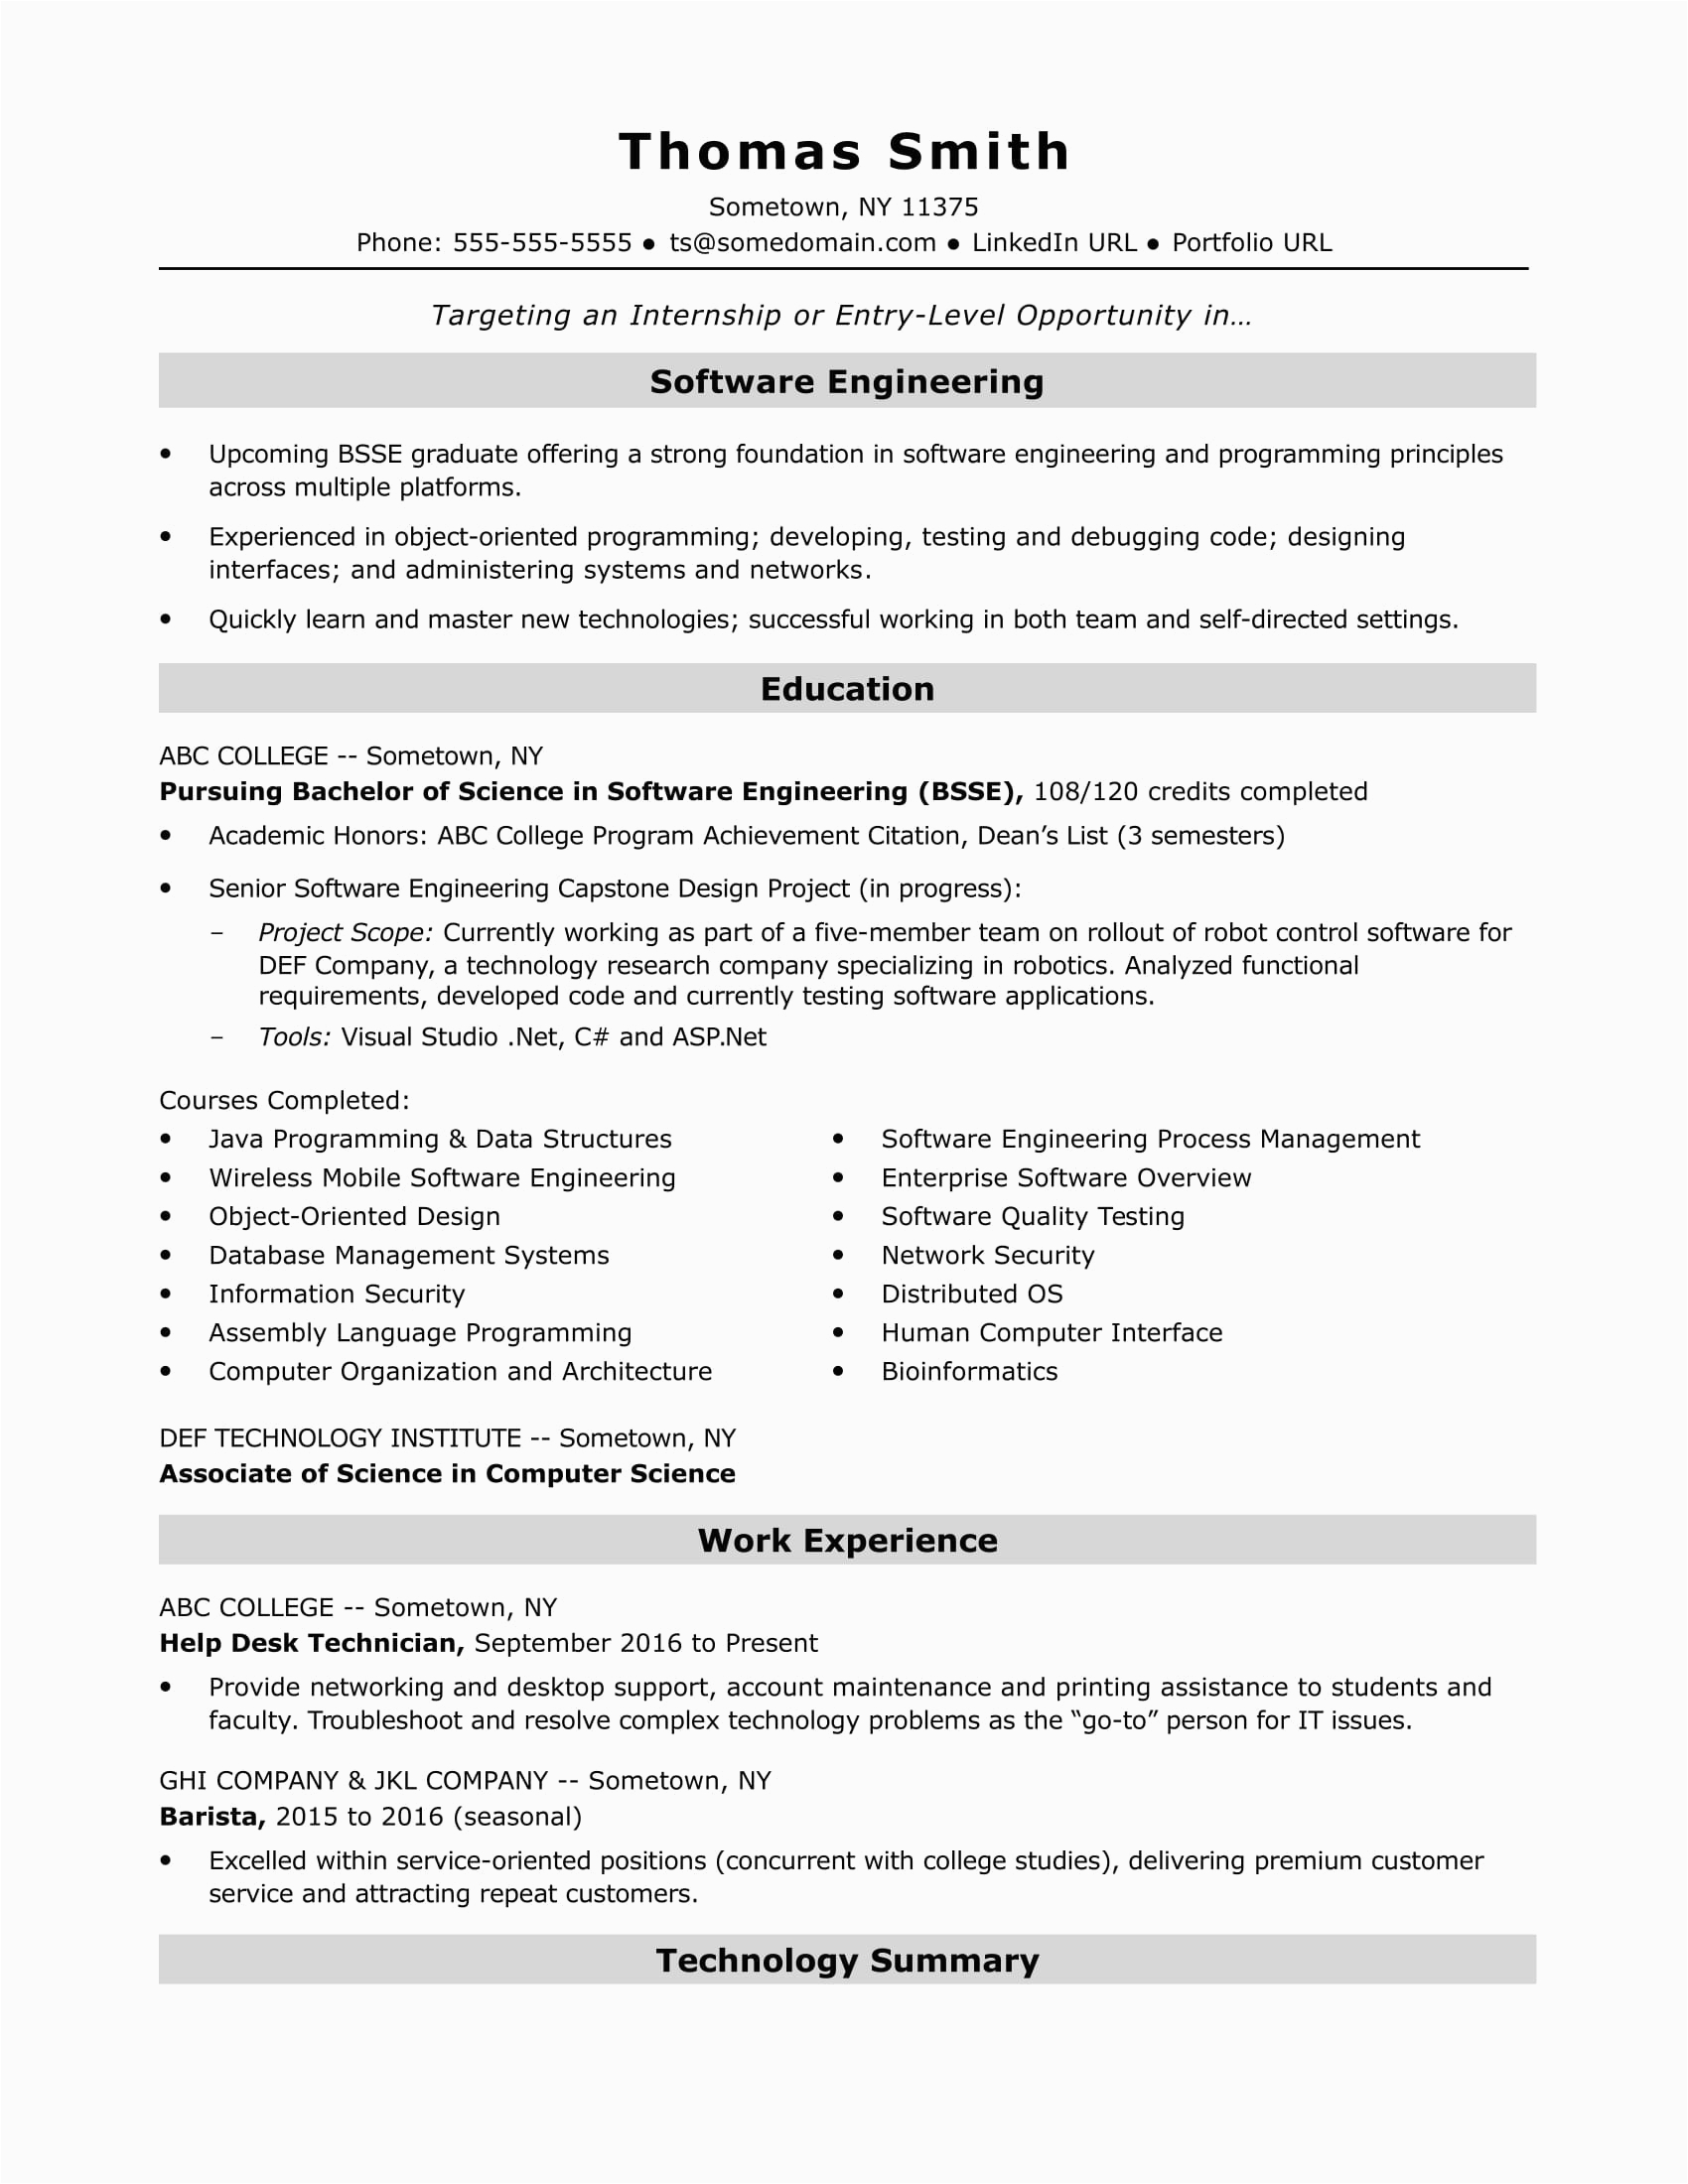 Sample Resume for Entry Level software Positions Entry Level software Engineer Resume Sample